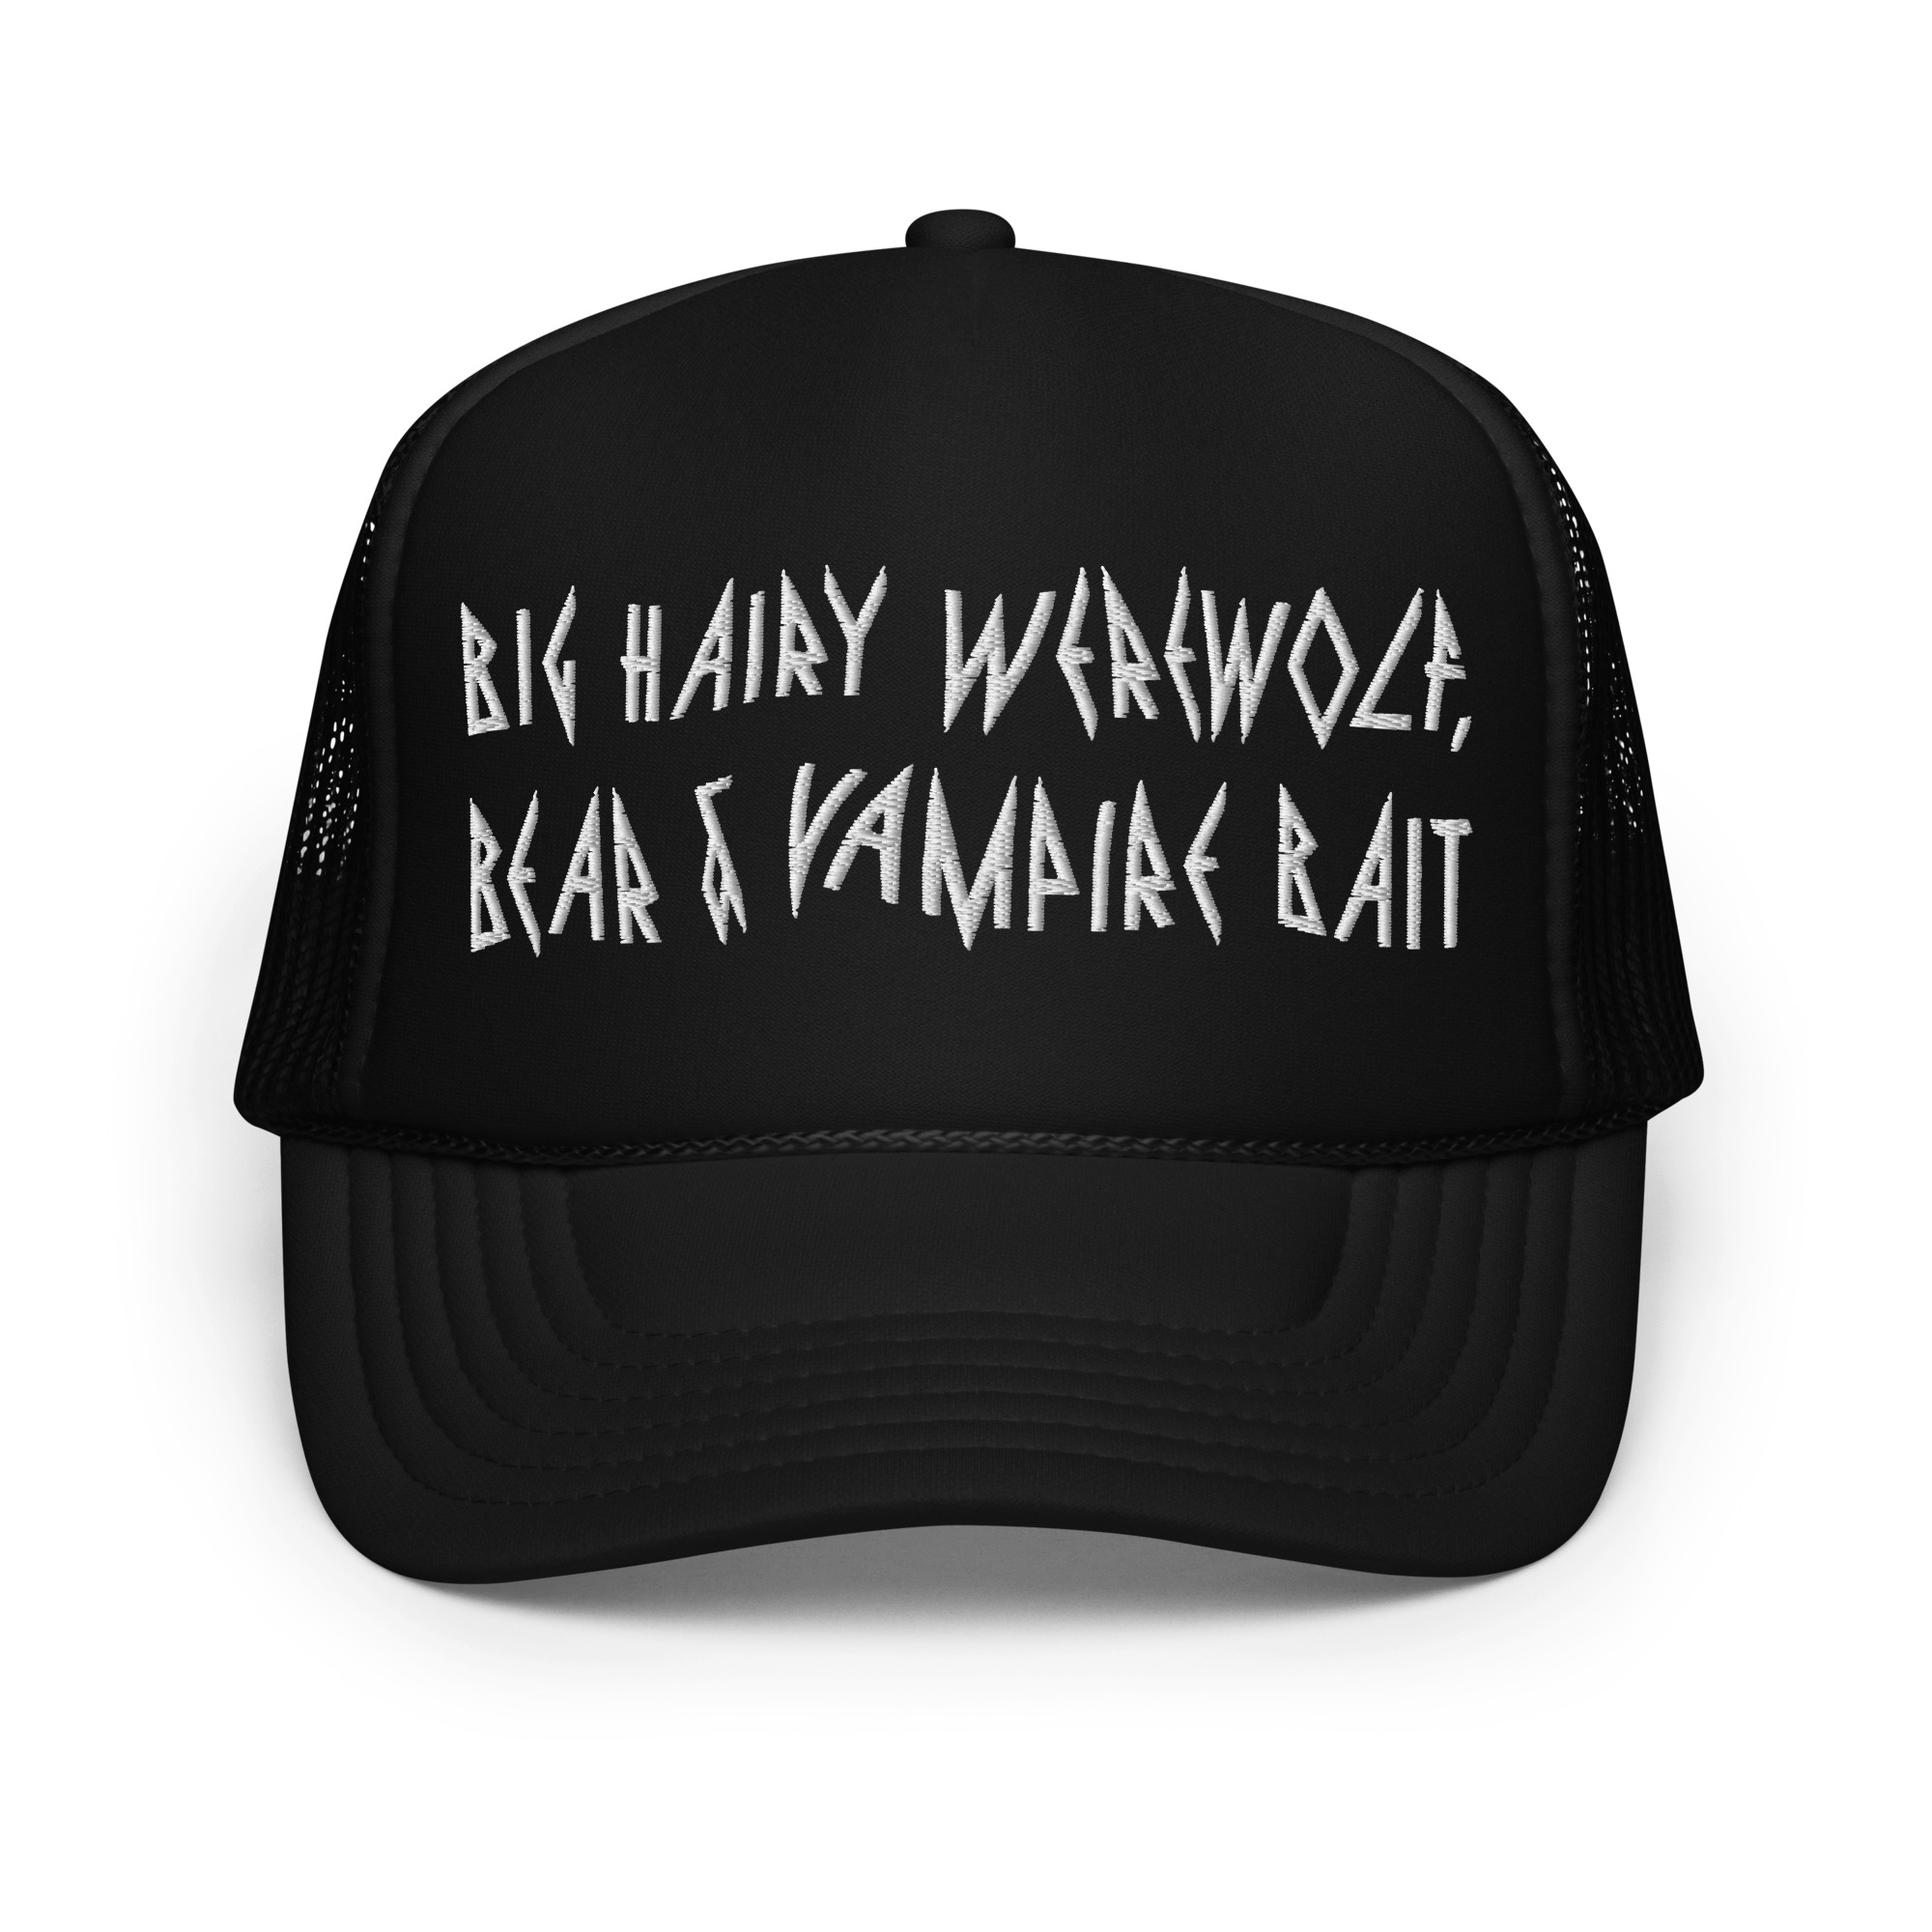 Featured image for “Big Hairy Werewolf, Bear & Vampire Bait - Foam trucker hat”